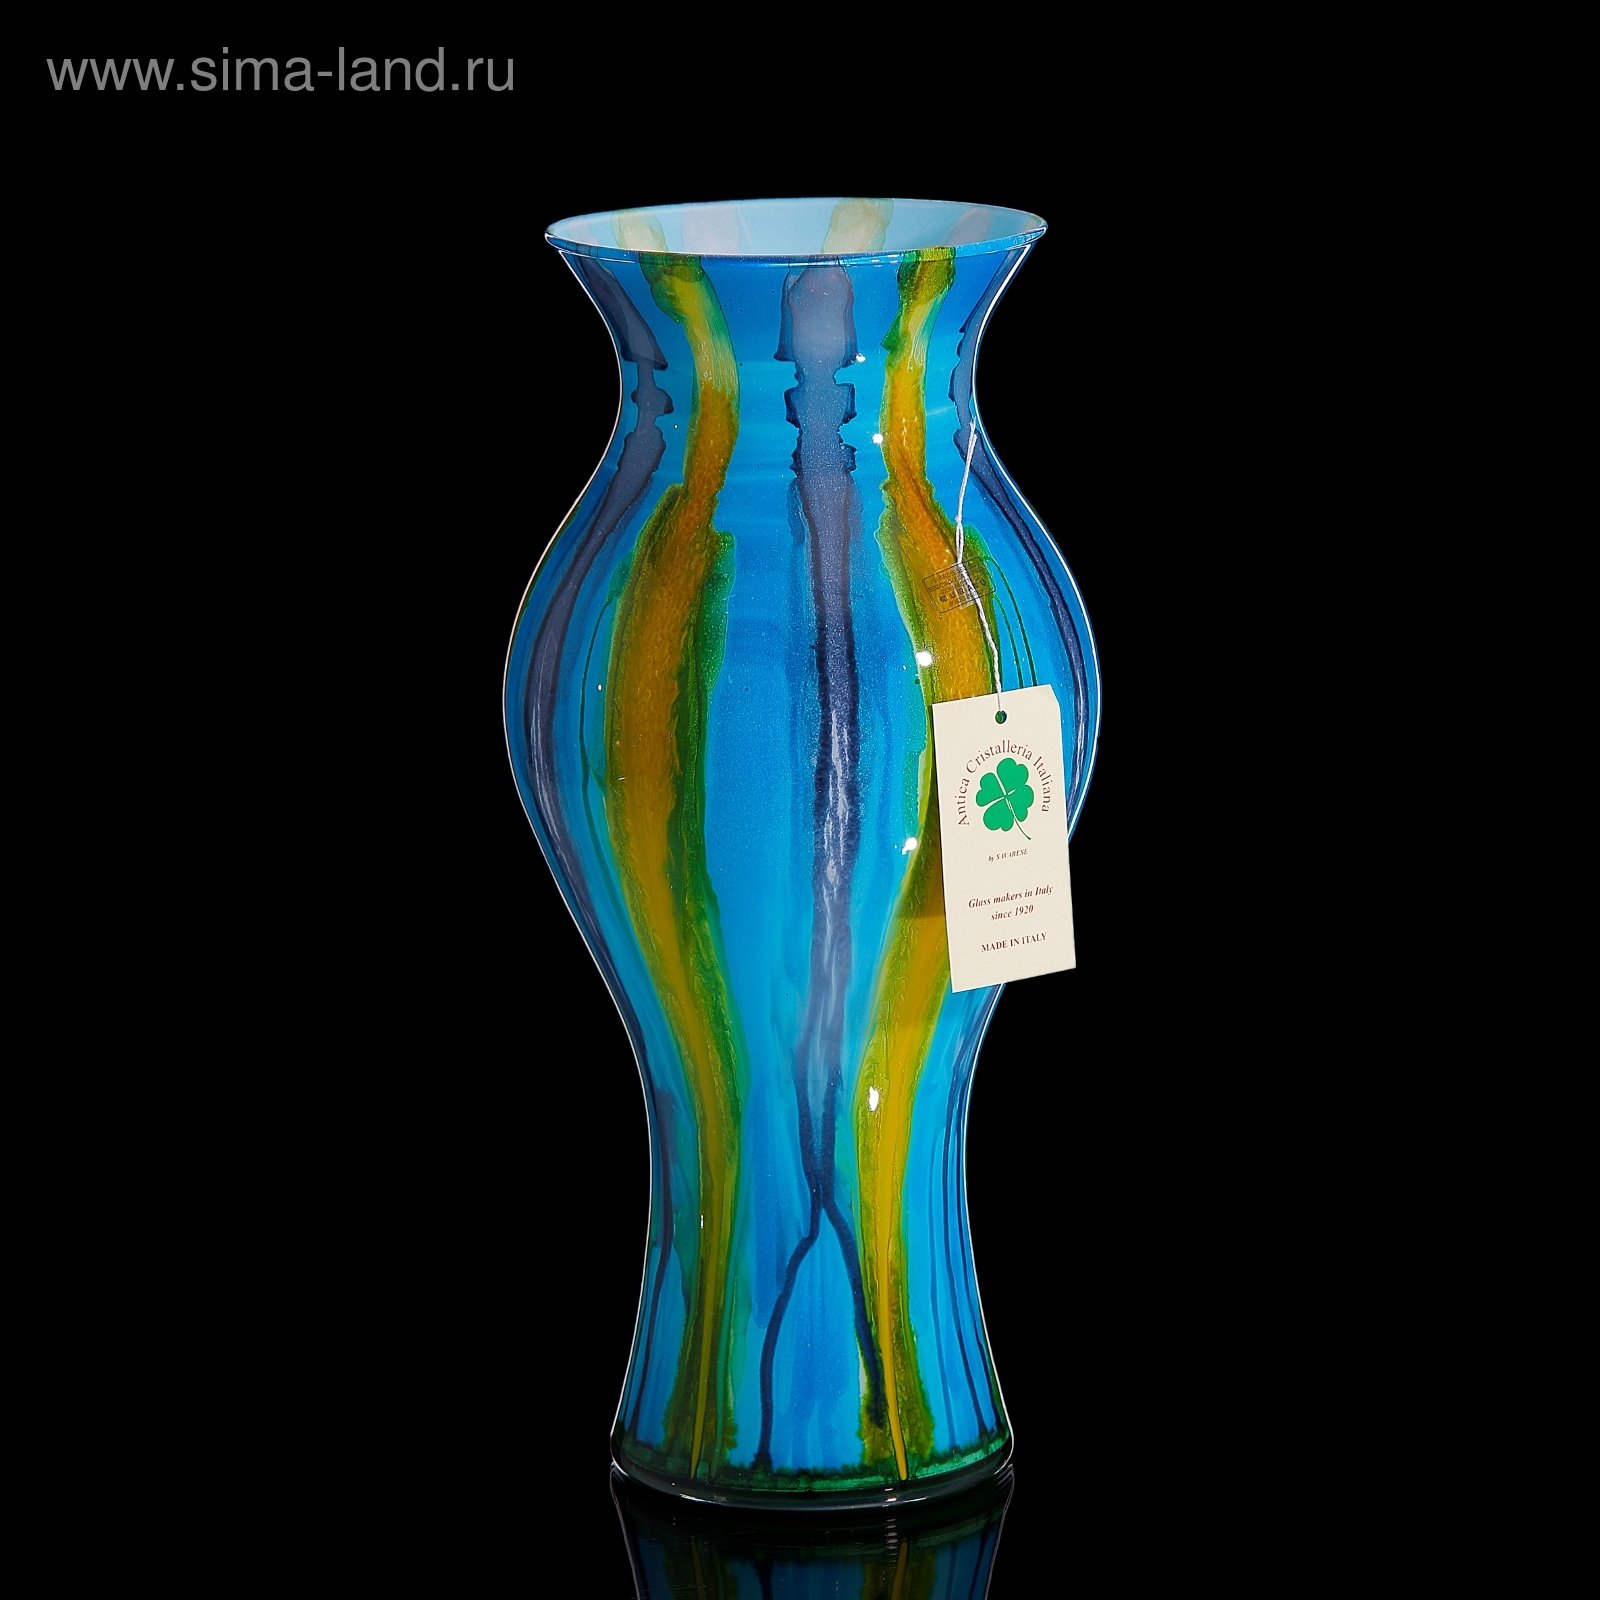 Цветной ваза. Ваза Inka Glass Vase. Ваза н/н 40 см PIANTICA Green. Ваза "Эмджей-8" (стекло), d11xh25,4 см прозрачный арт.2712. Ваза Италия Deru Design.